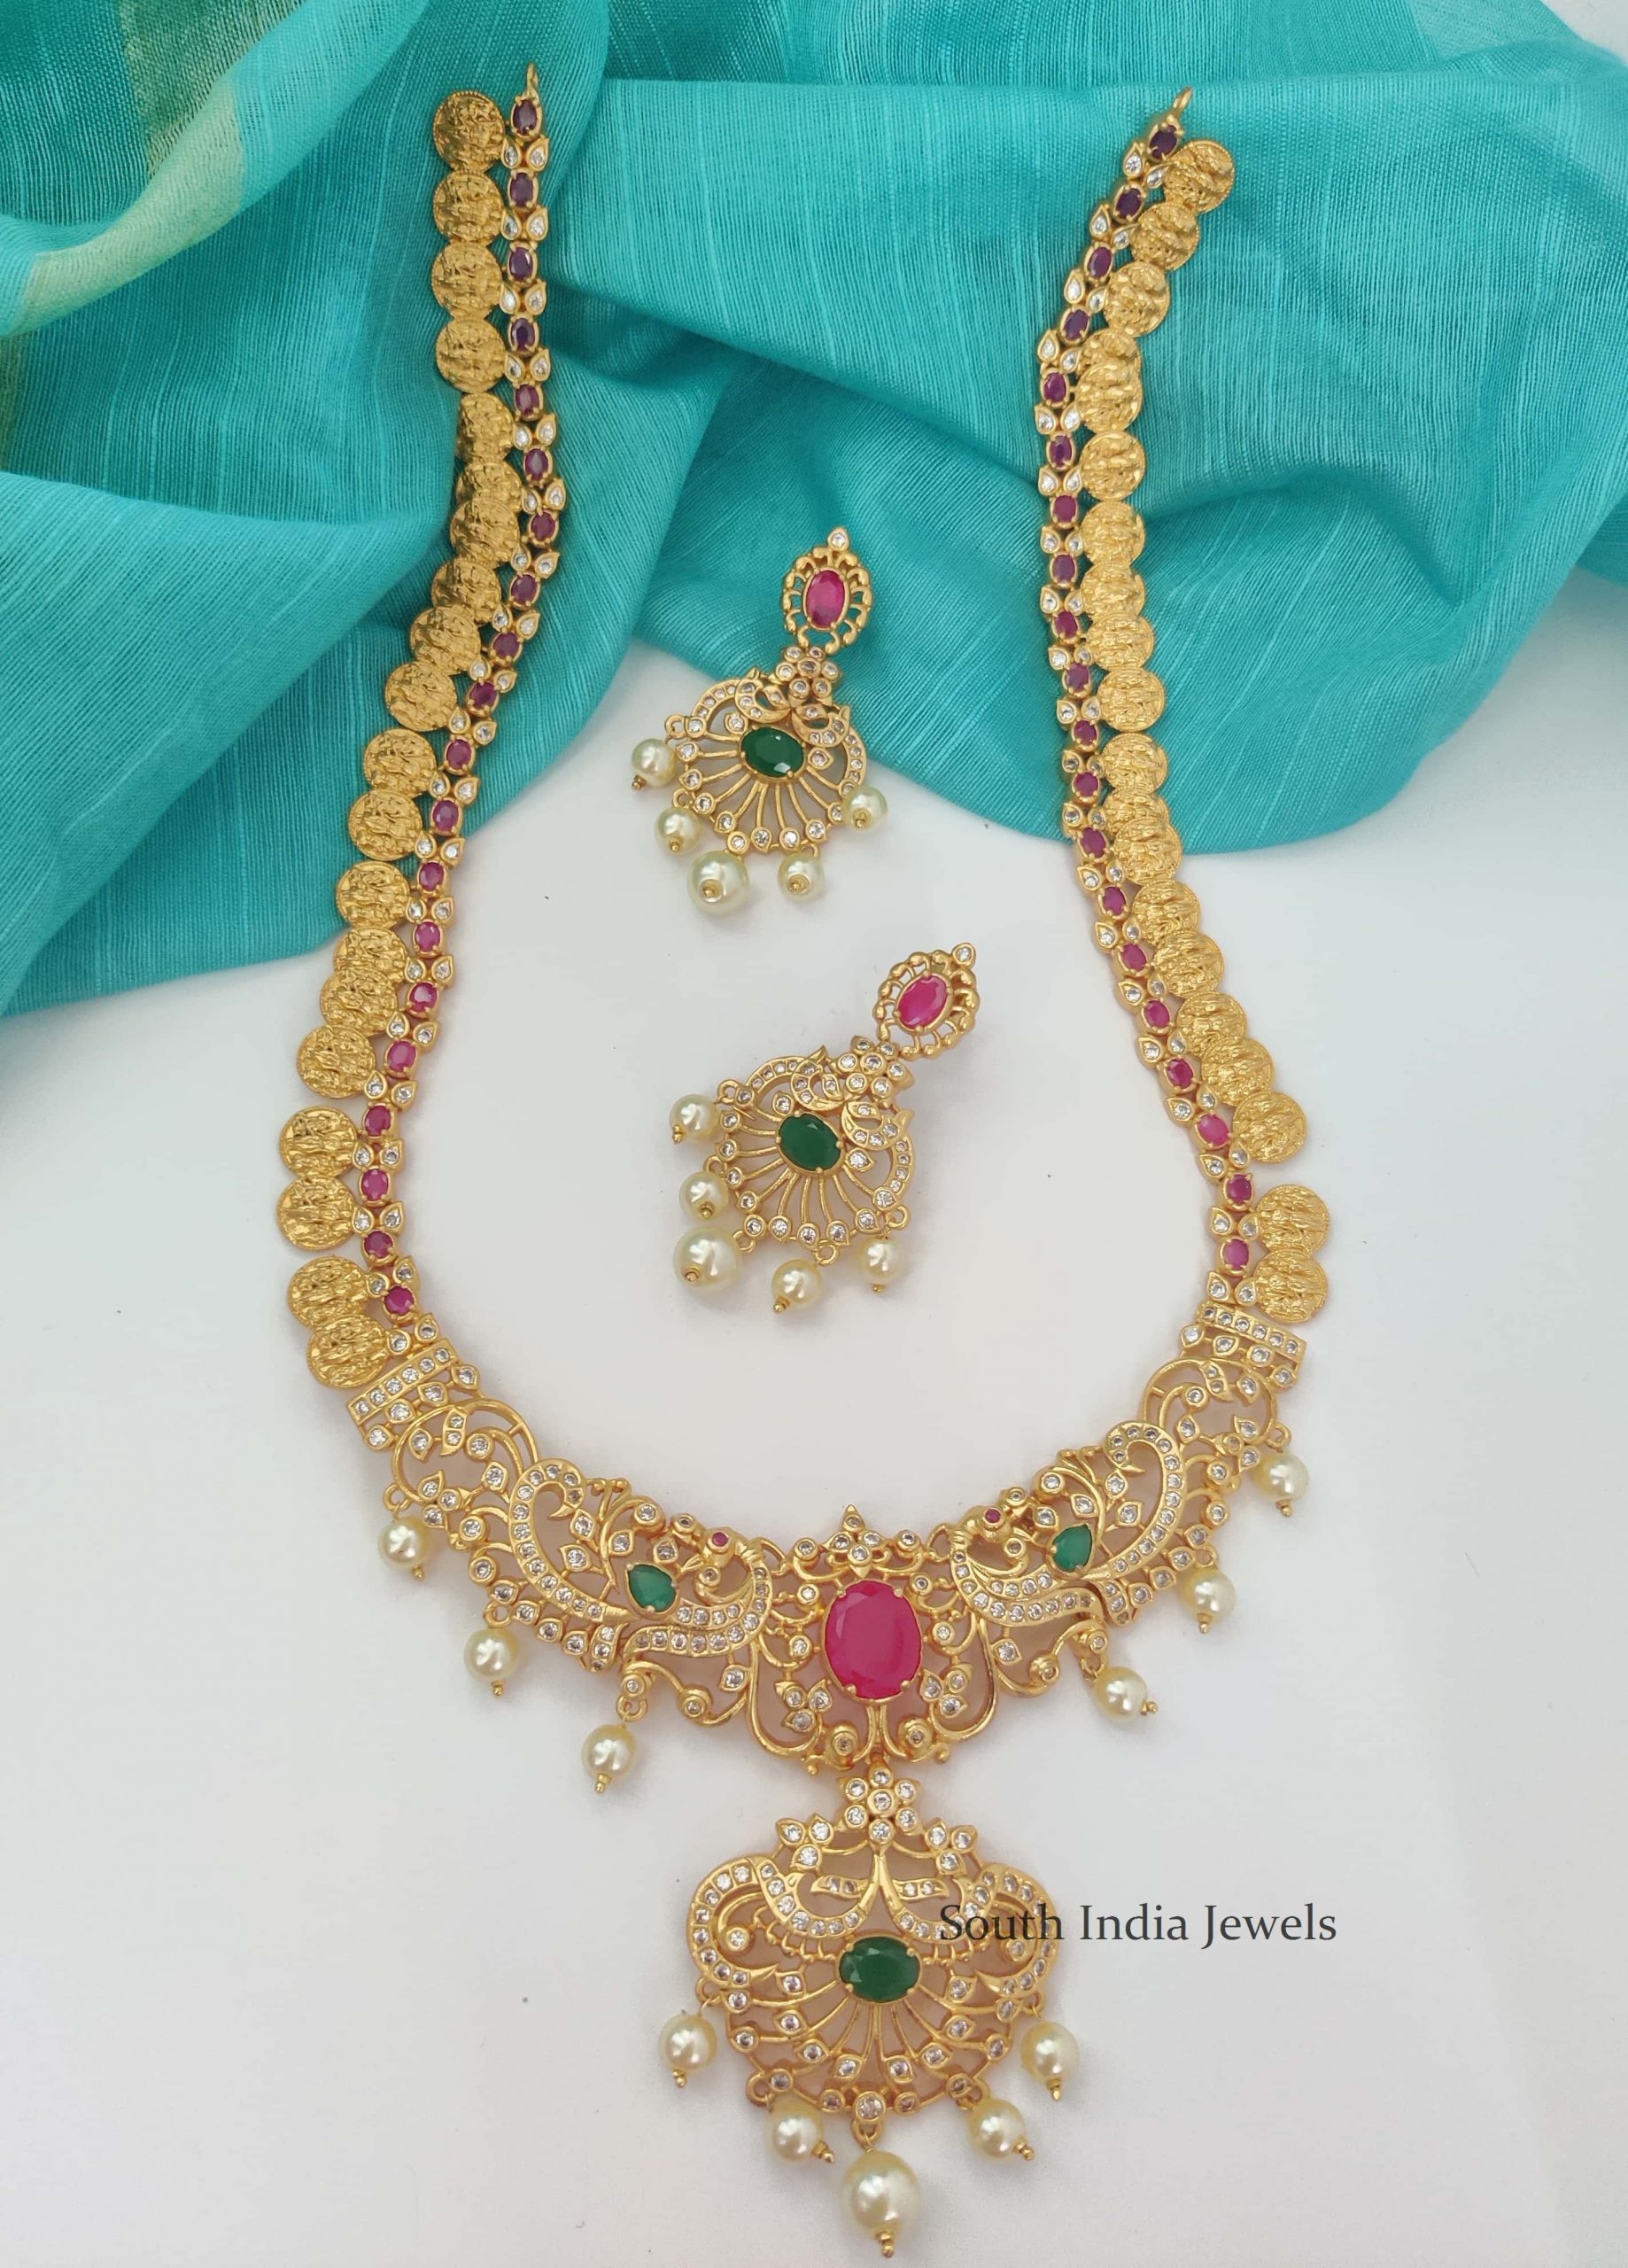 Grand Imitation Ram Parivar Long Haram - South India Jewel